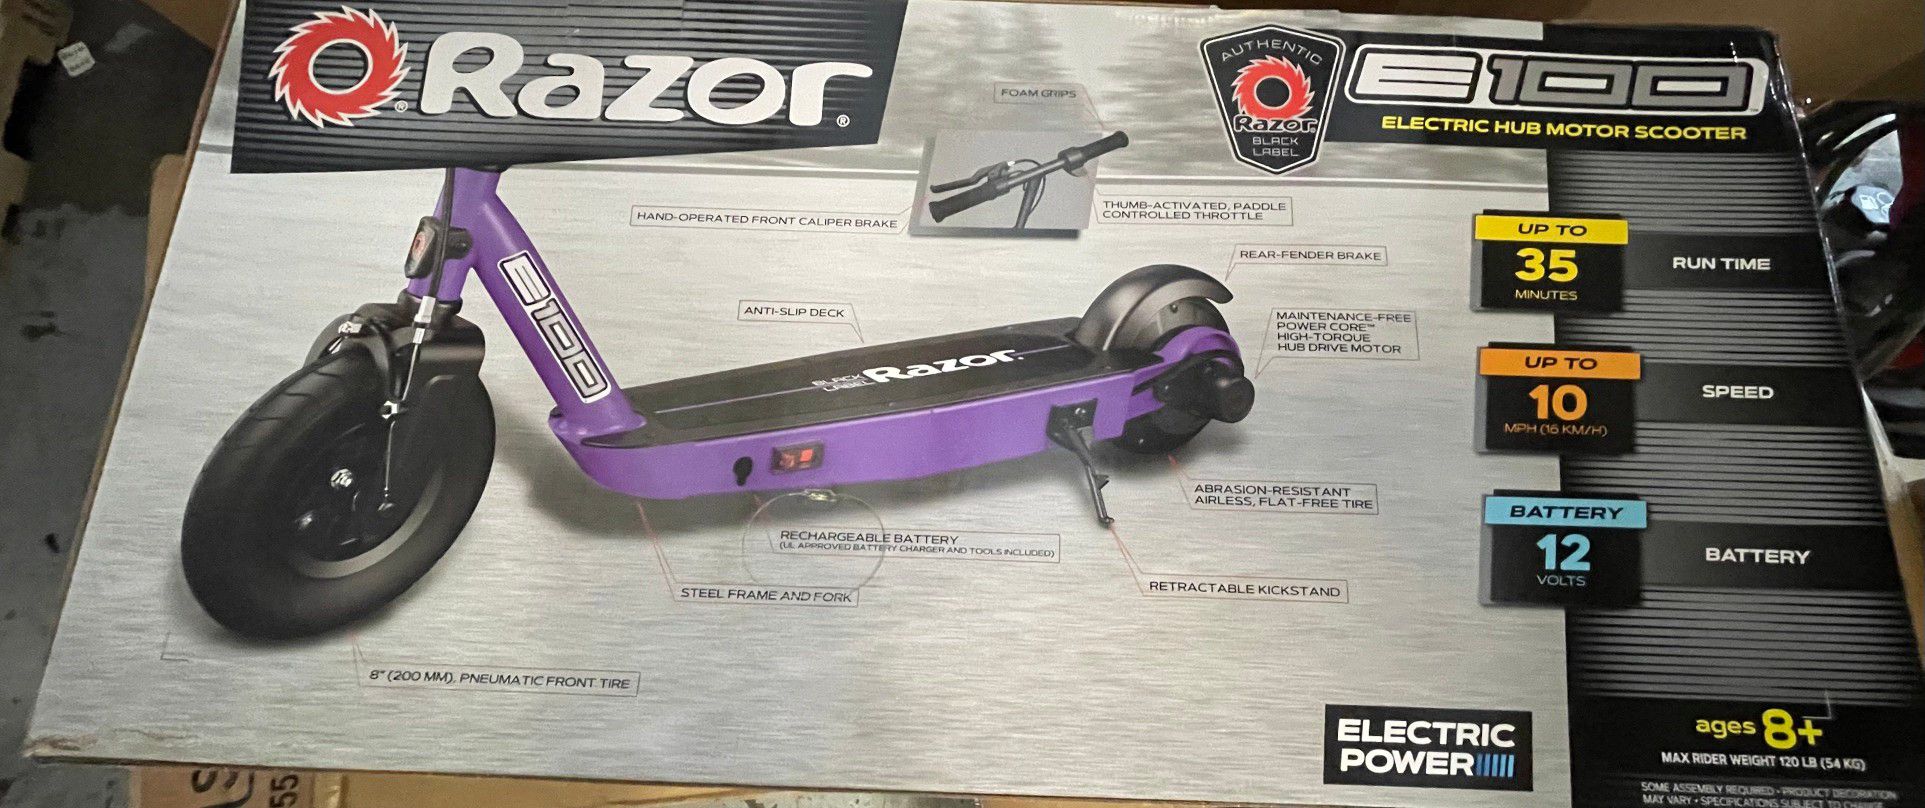 Razor Black Label E100 Electric Scooter - Purple, for Kids Ages 8+